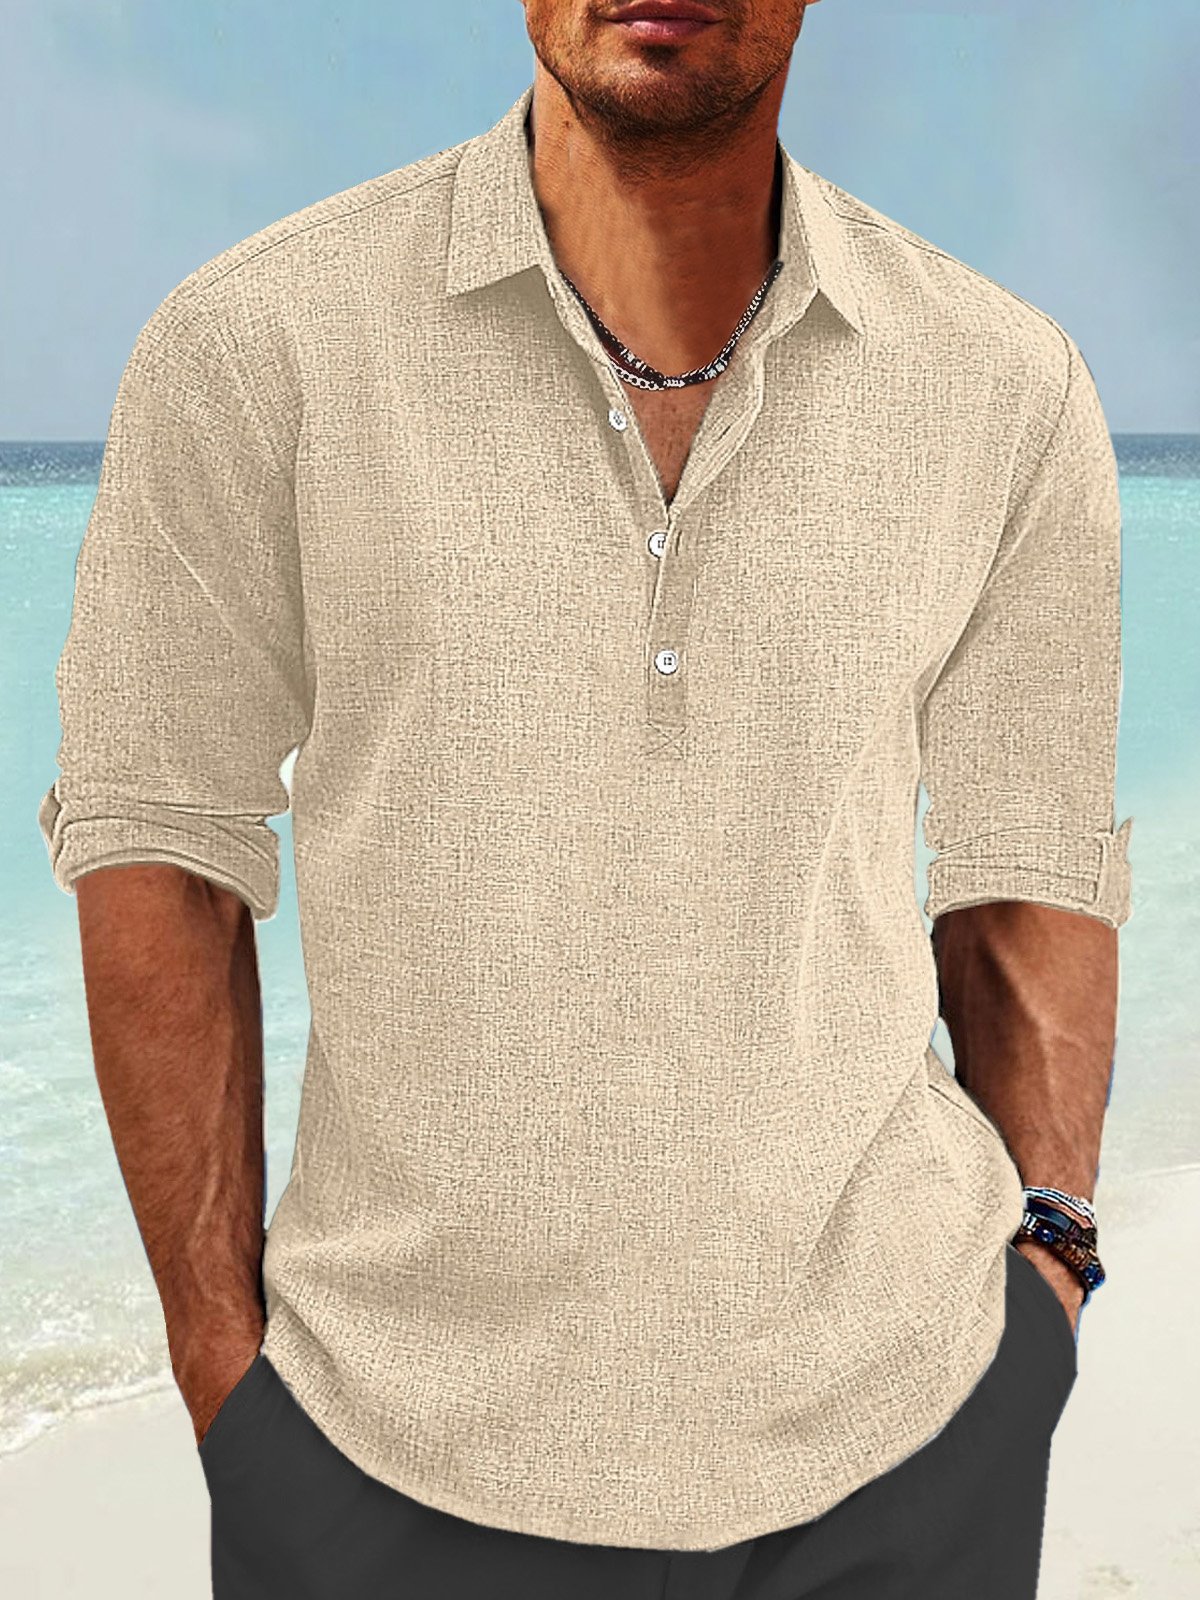 JoyMitty Natural Fiber Pullover Shirt Collar Button Up Daily Hawaiian Long Sleeve Shirt